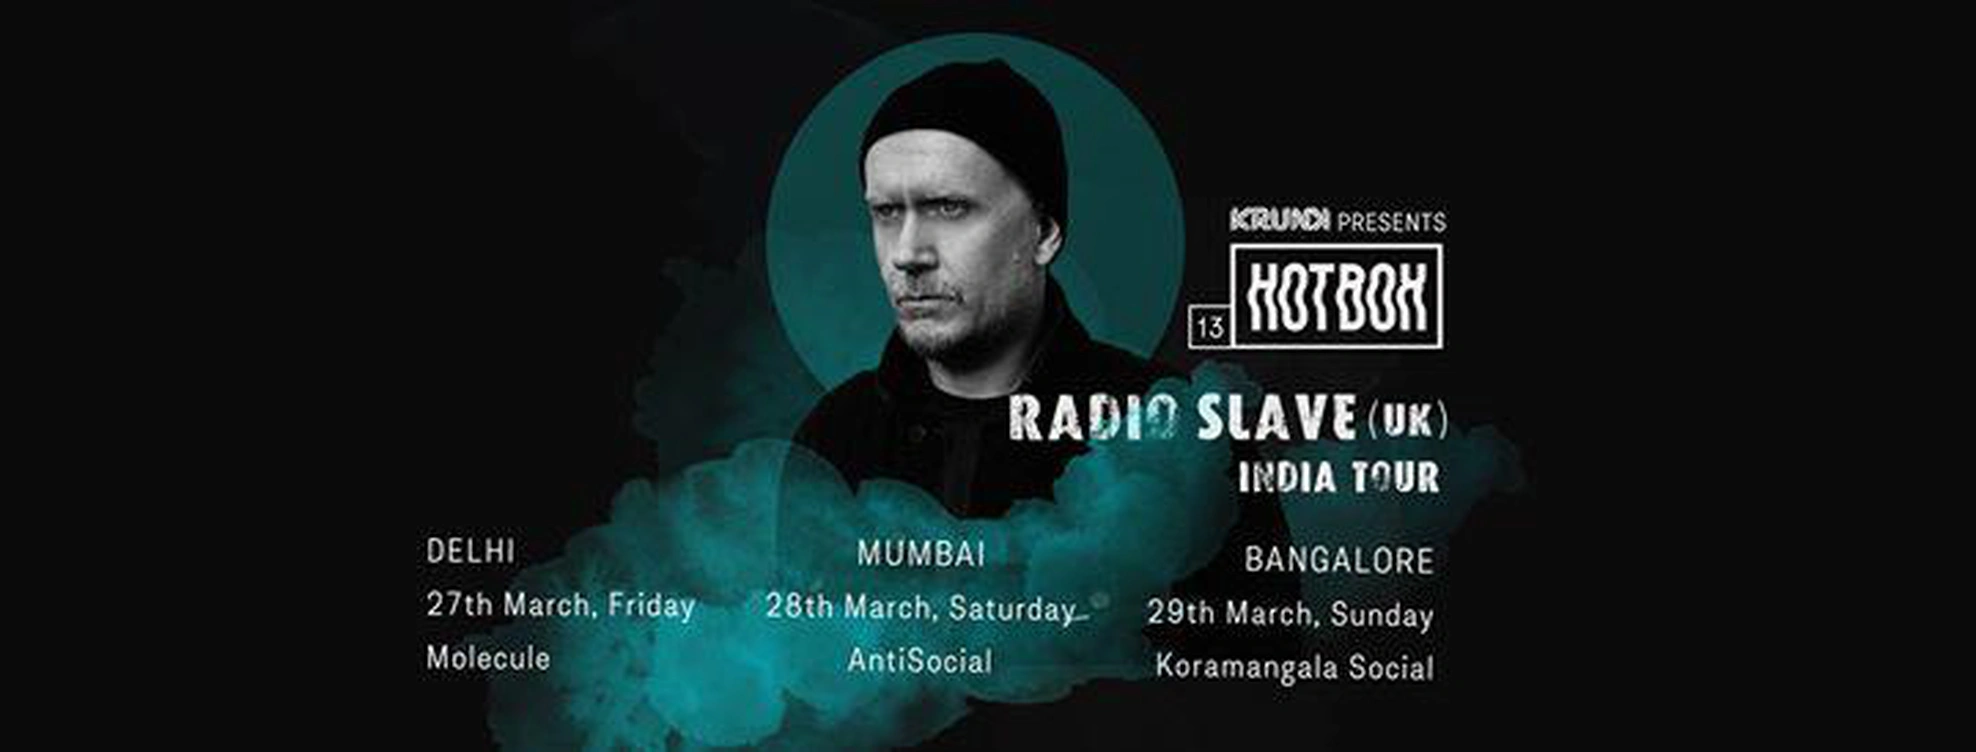 Krunk Presents: Hotbox 13 ft Radio Slave (UK) | Molecule, Delhi